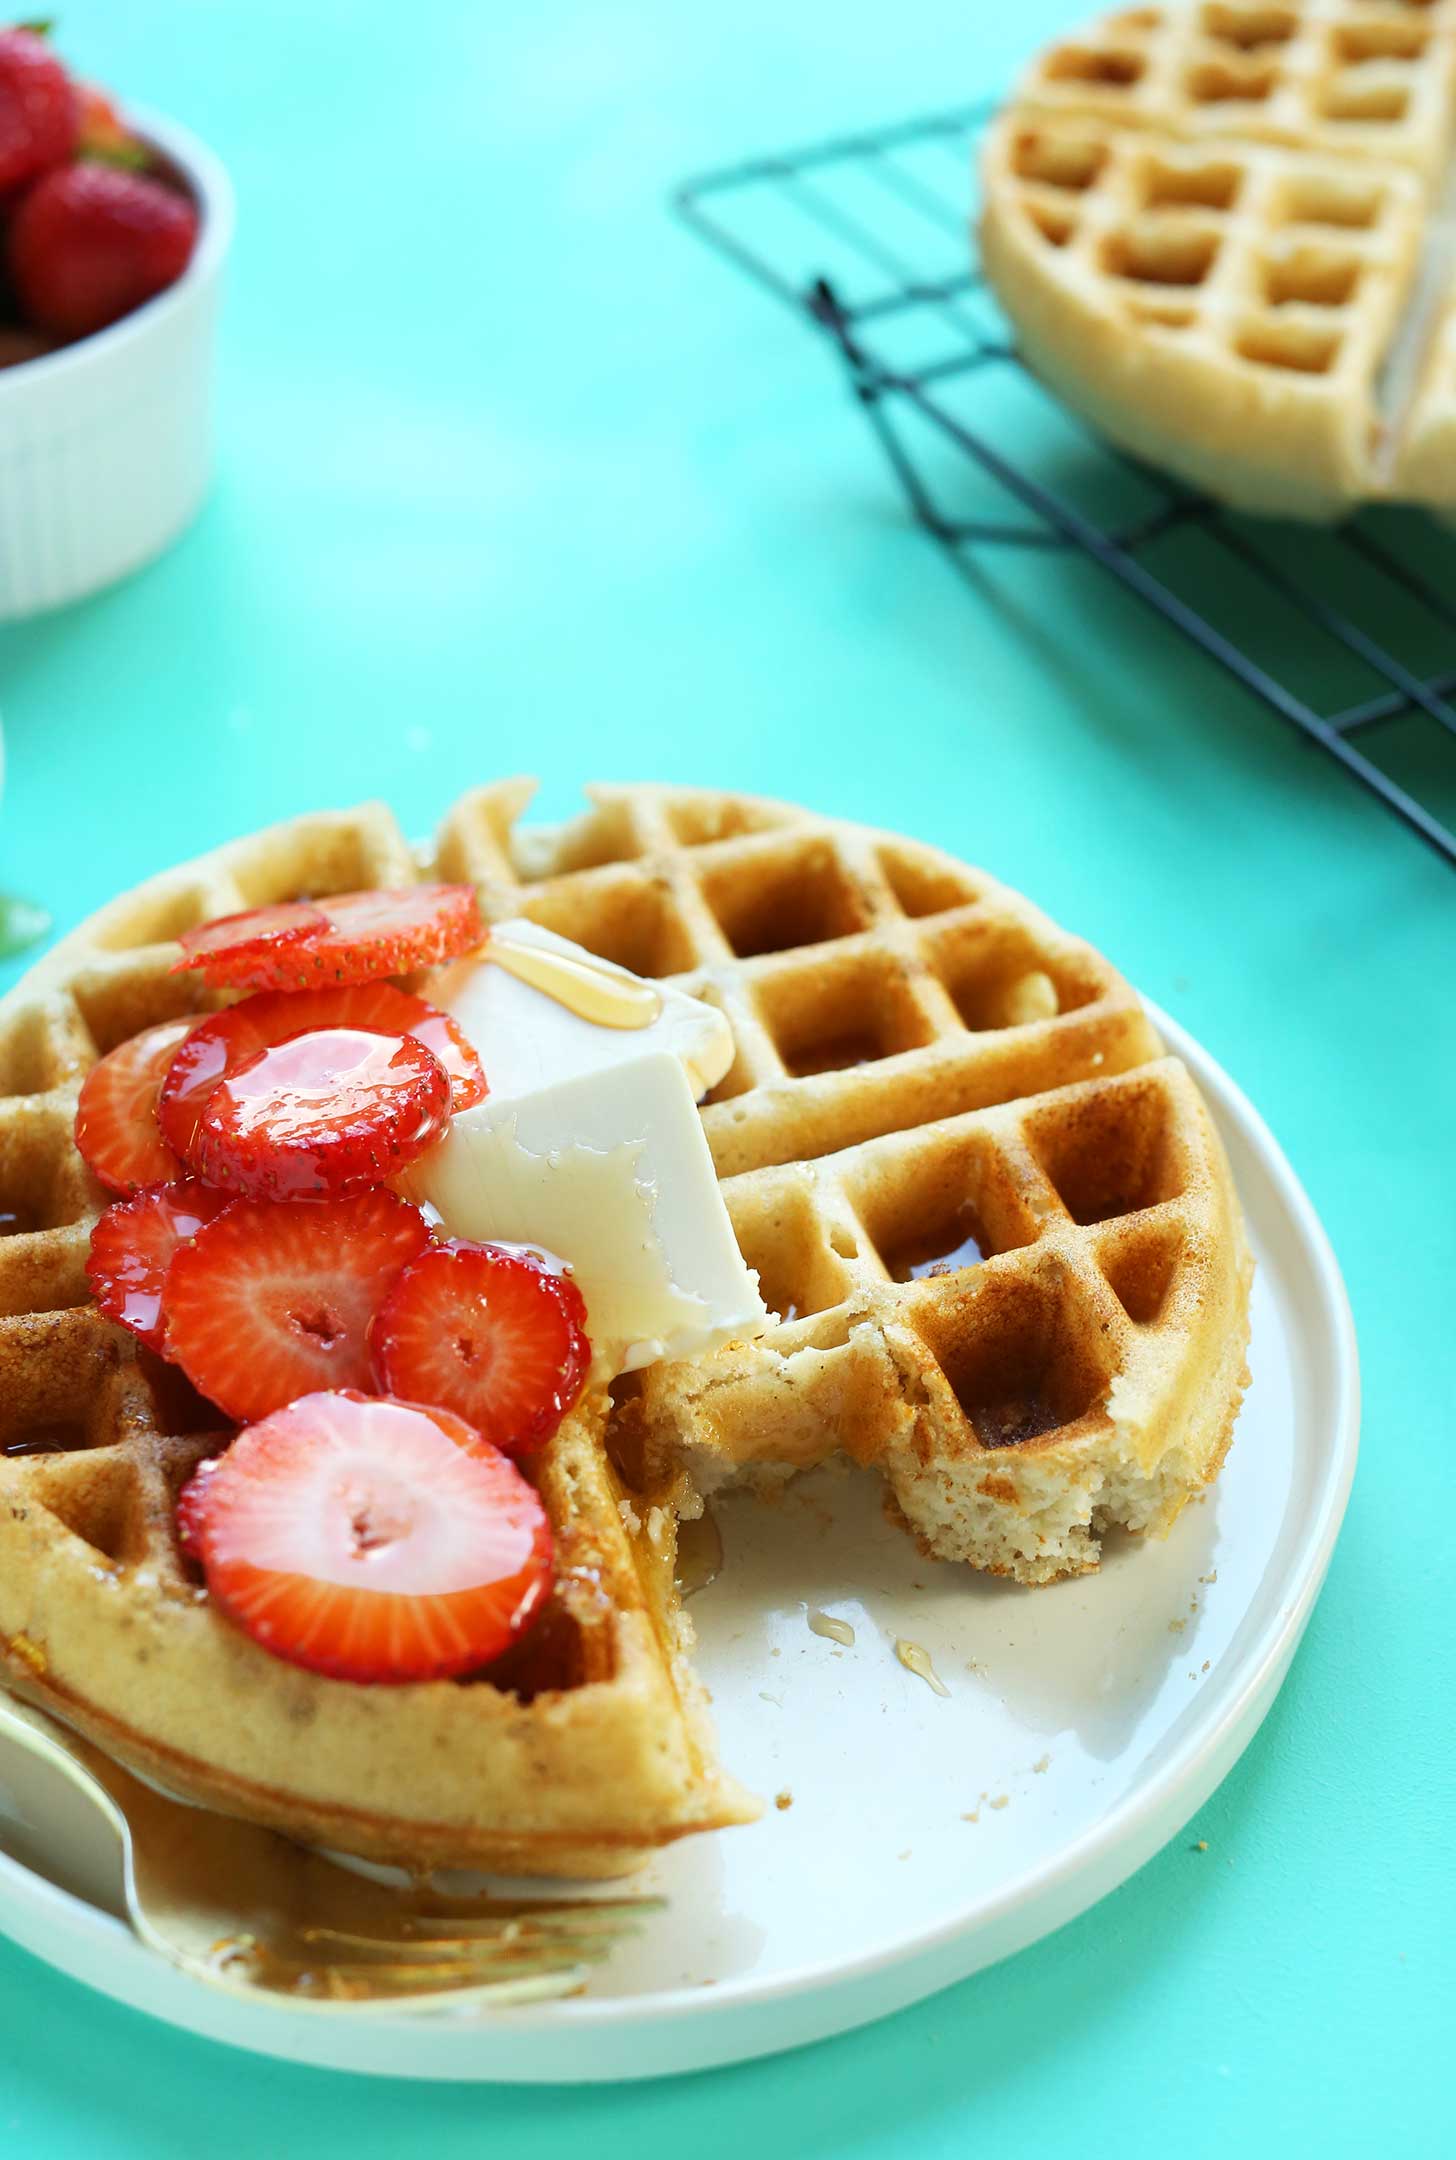 Partially eaten waffle on a plate for a gluten-free vegan breakfast